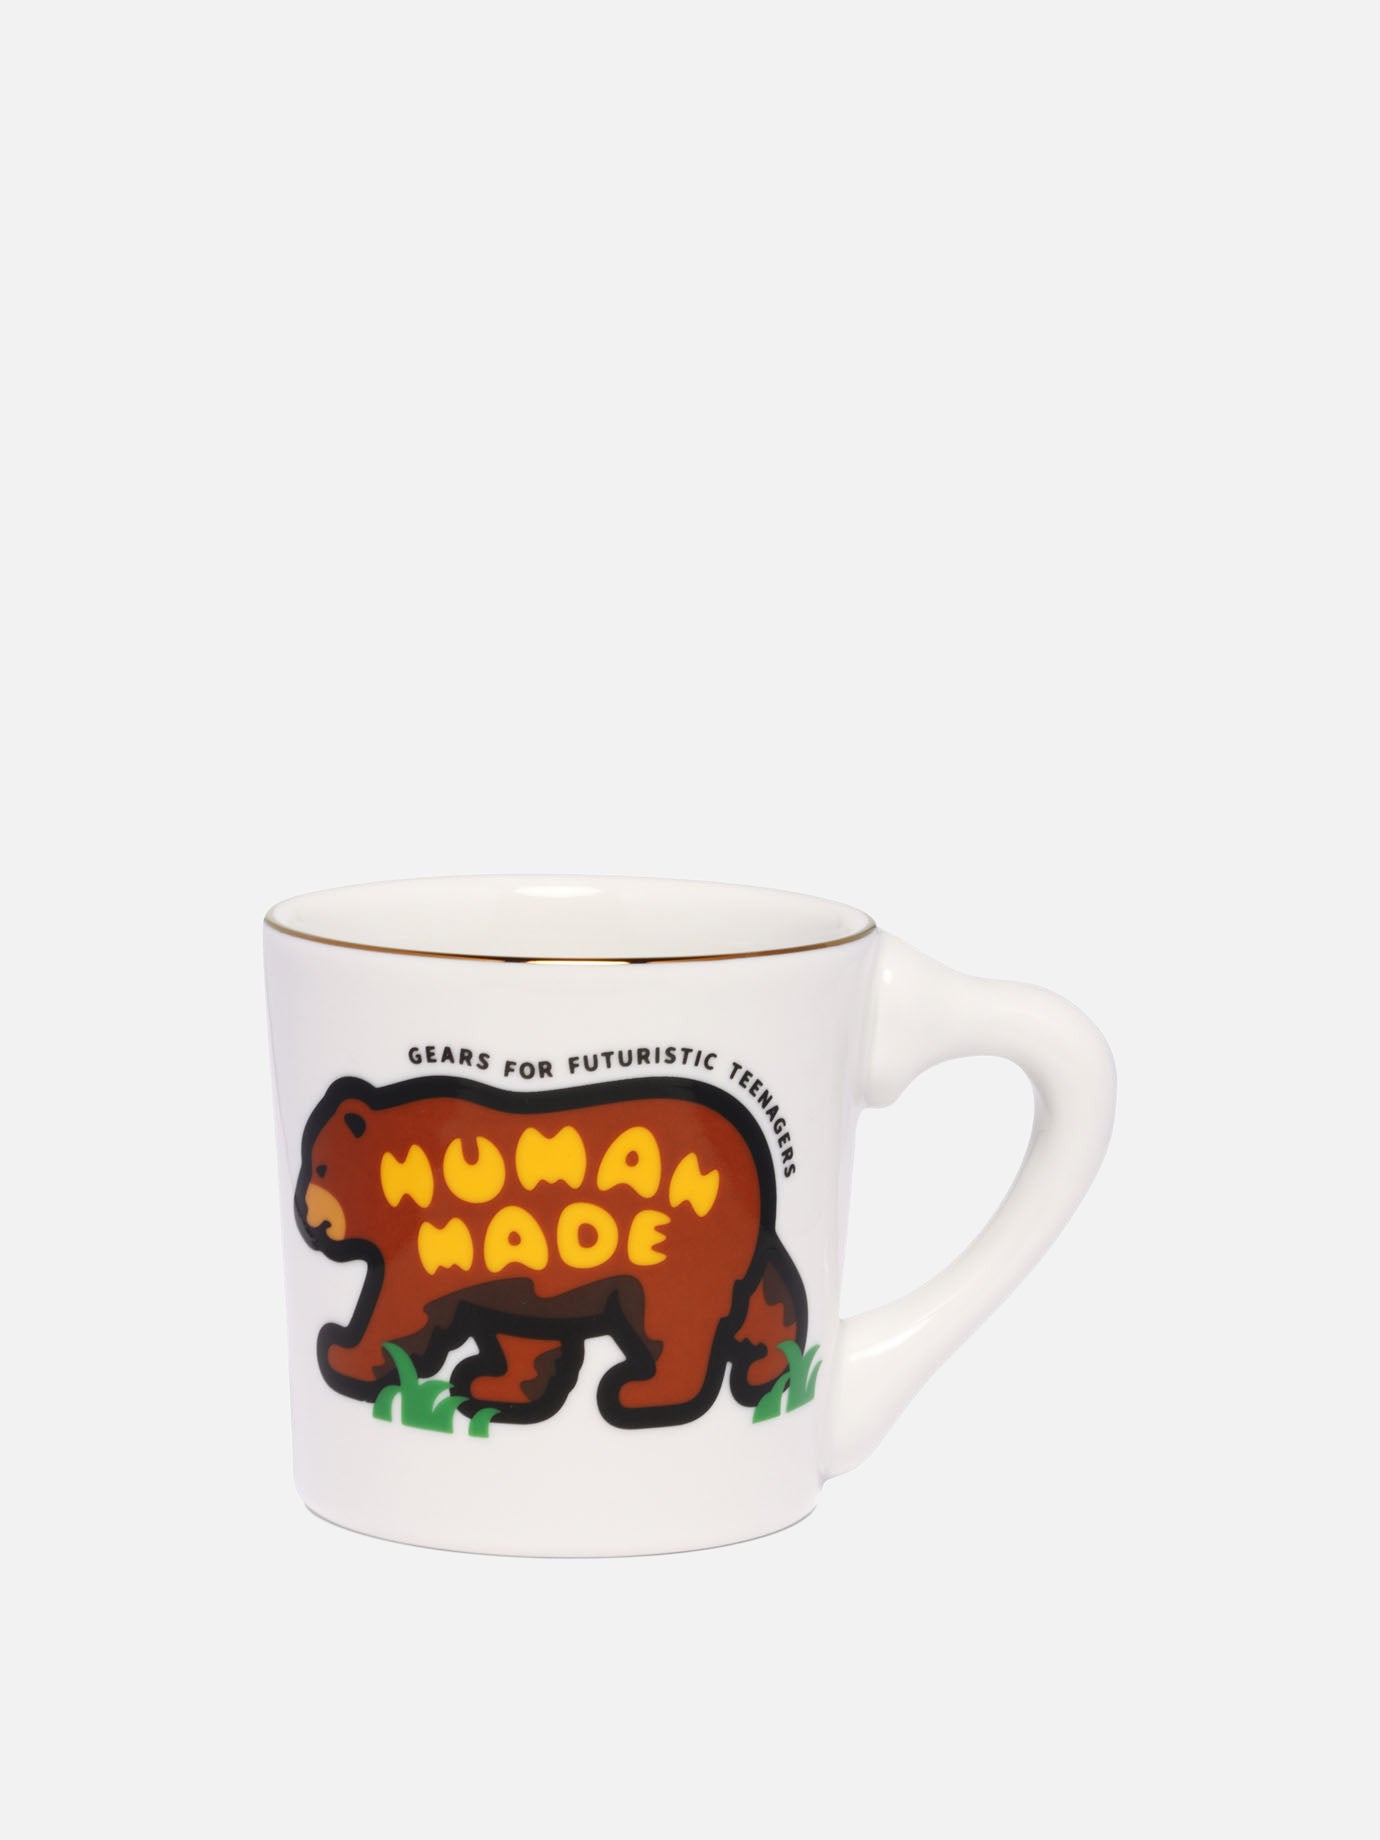 "Brown Bear" mug